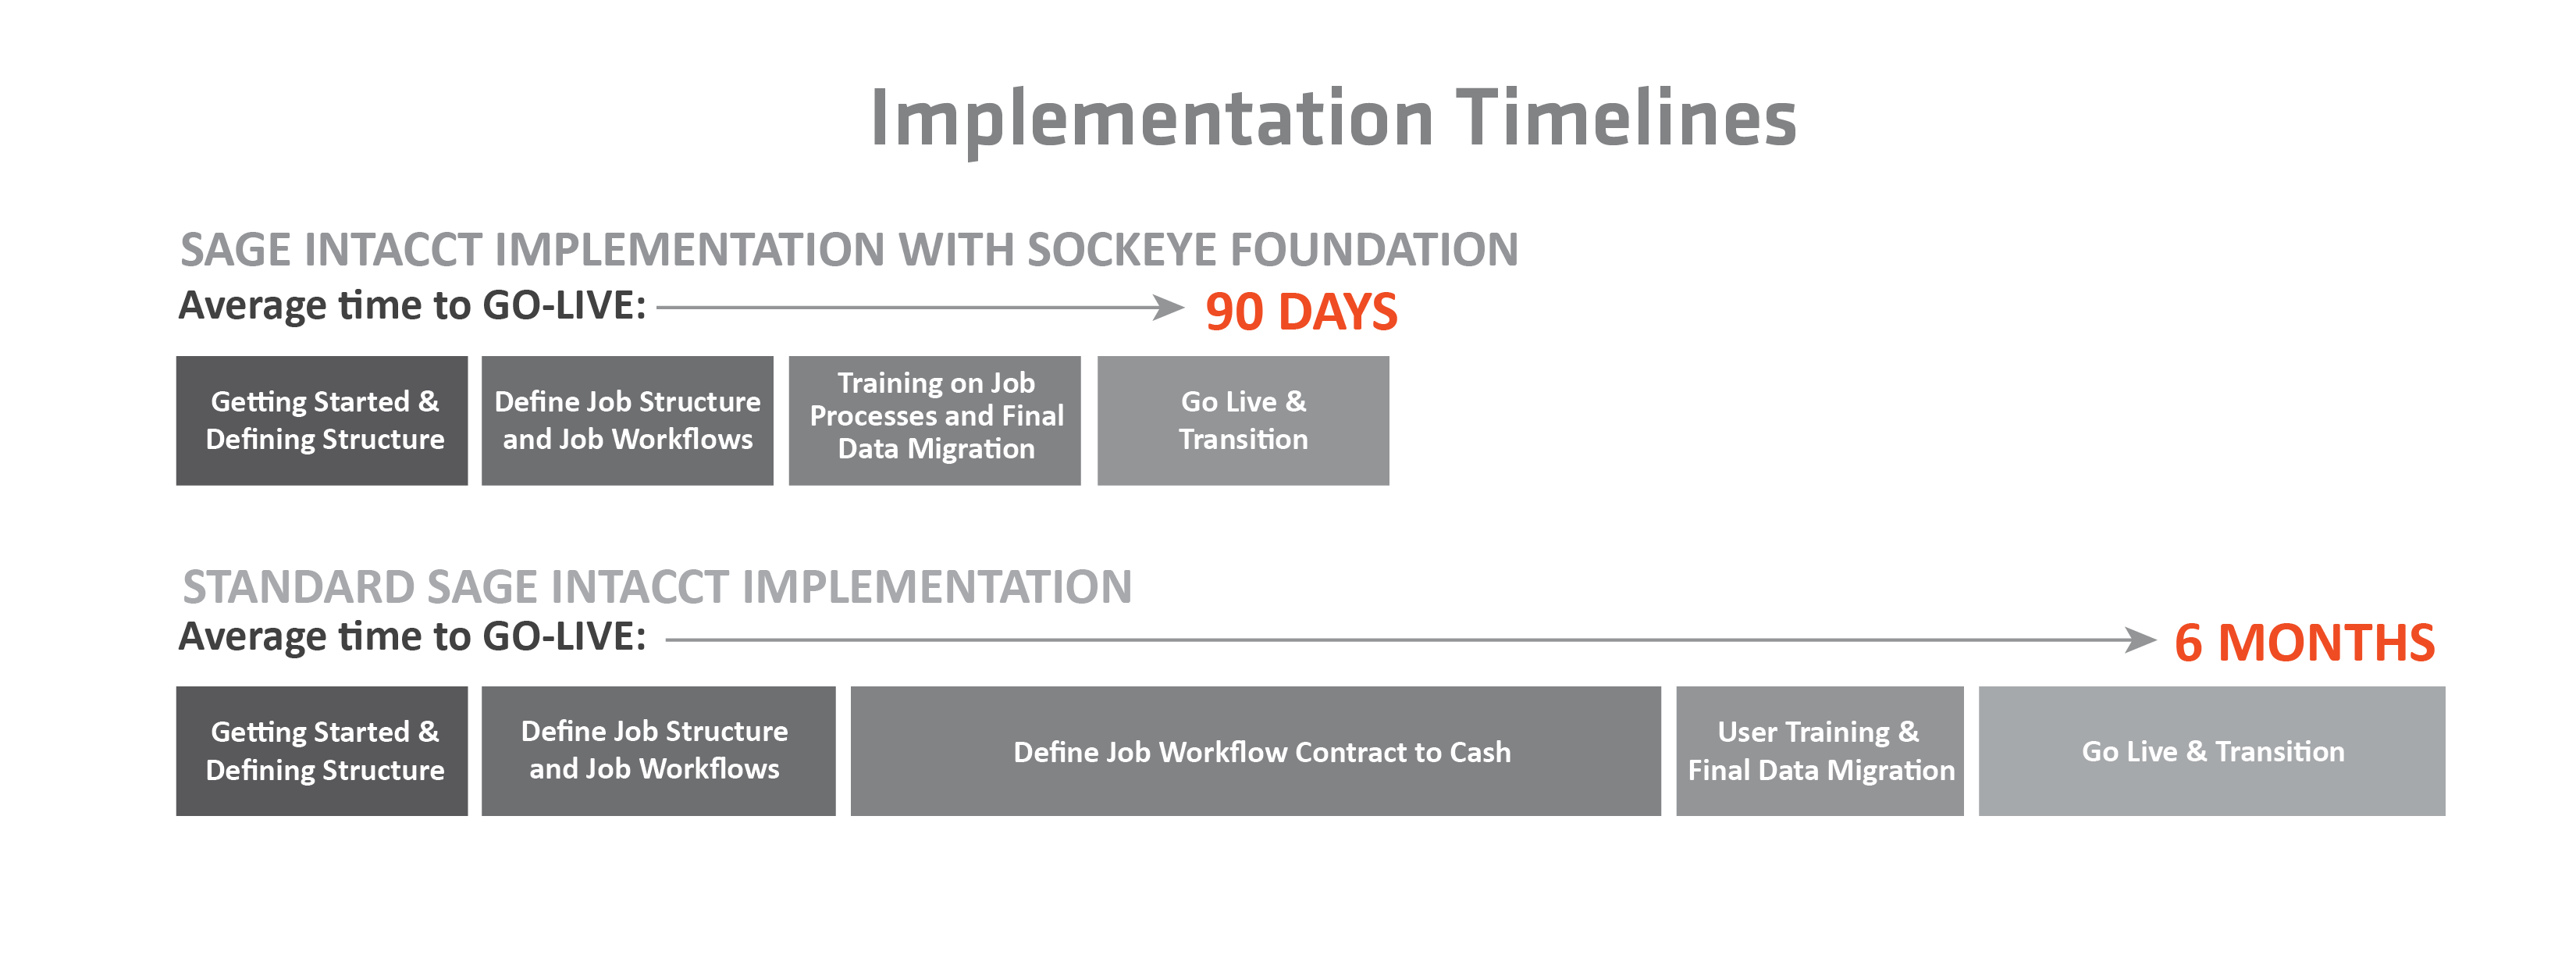 Sockeye Foundation timeline. Fast implementation for Sage Intacct